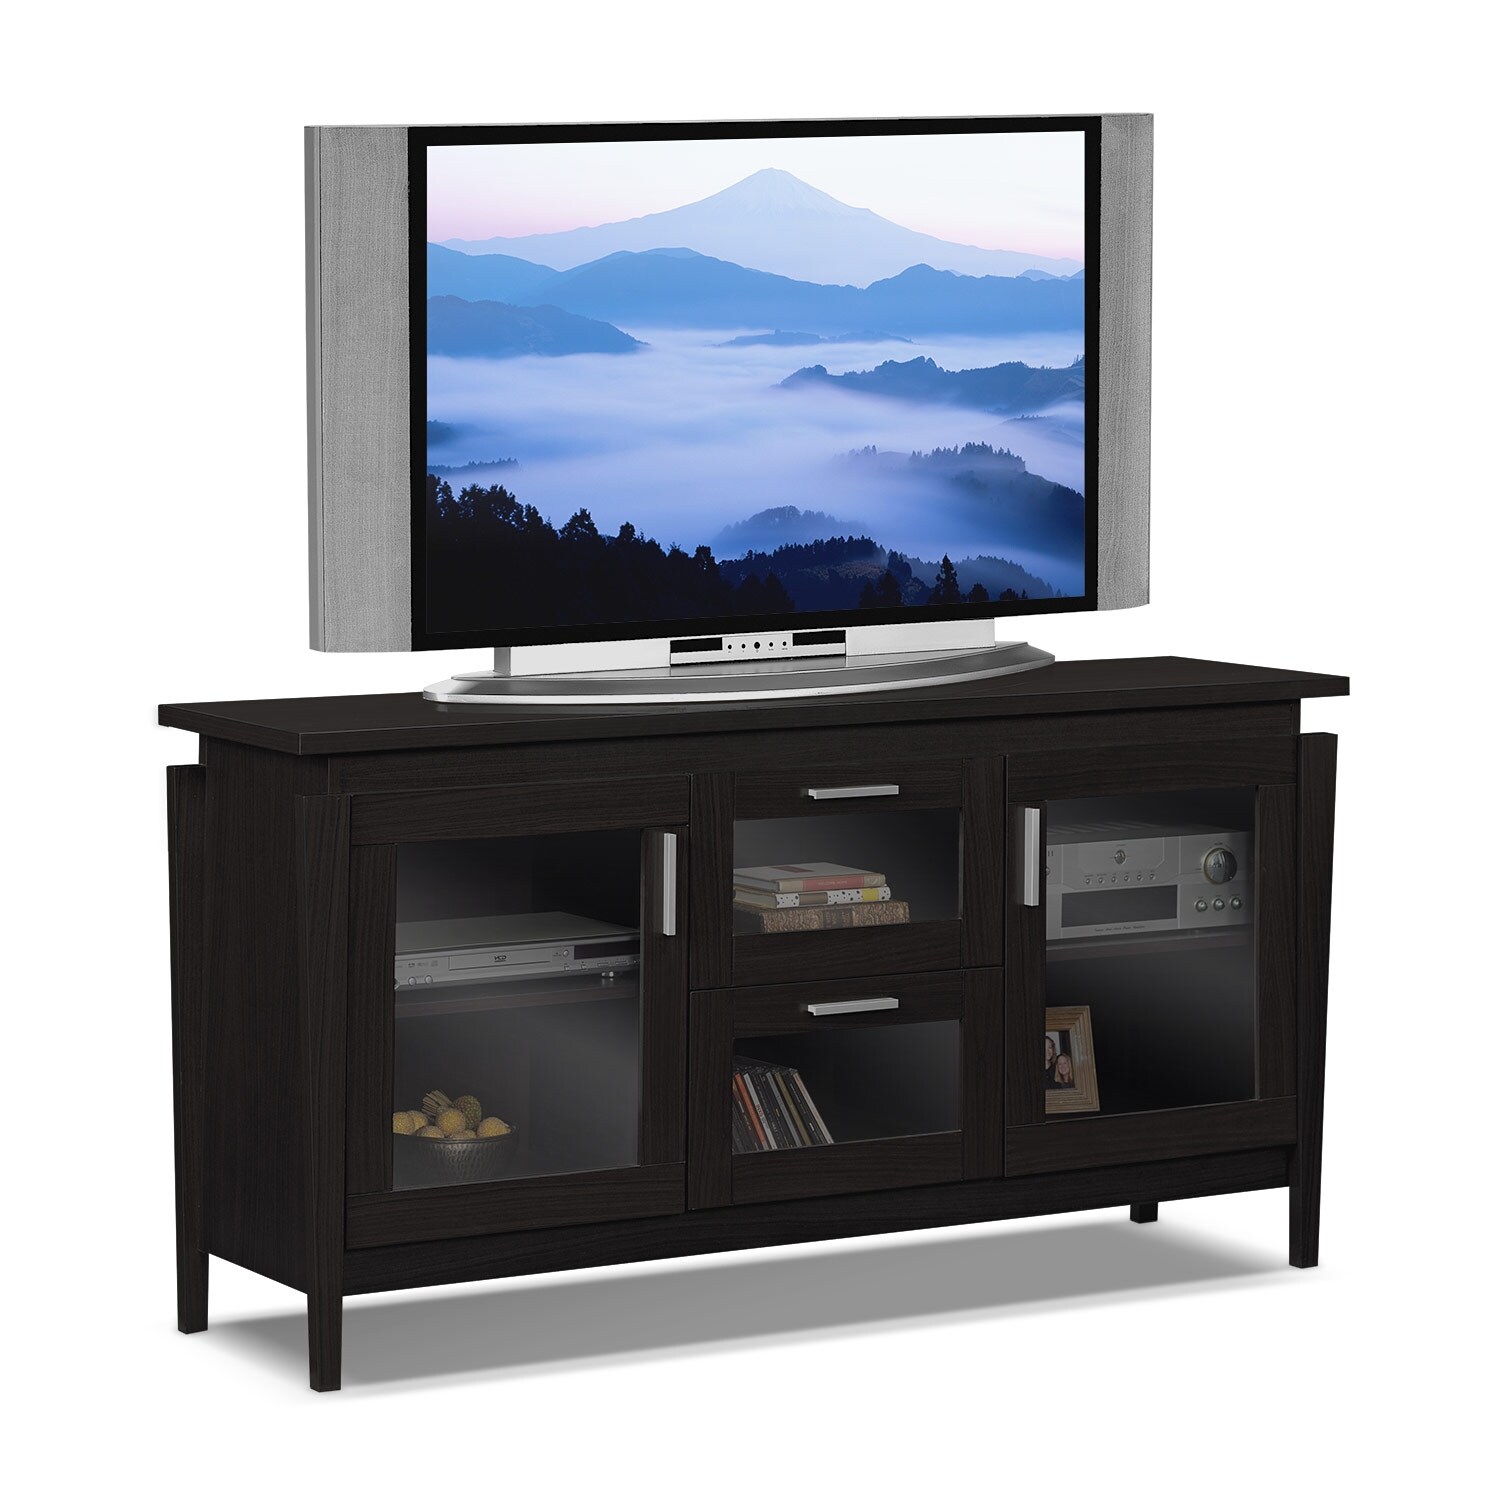 Saber 60"" TV Stand - Merlot | American Signature Furniture